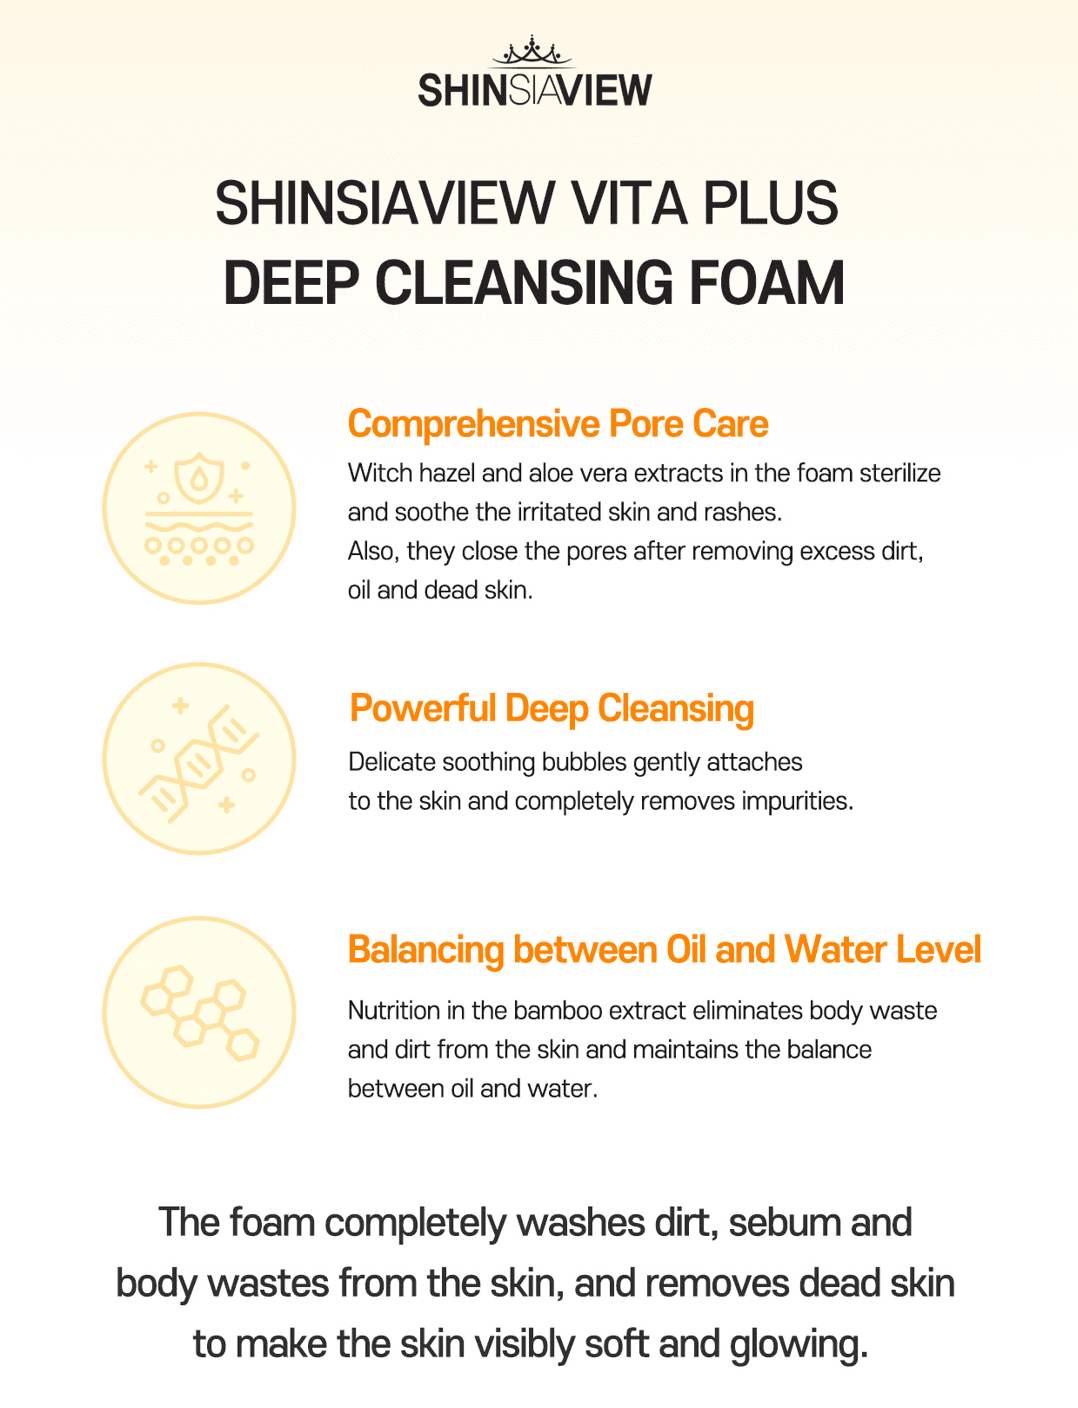 SHINSIAVIEW VITA PLUS Deep Cleansing Foam - Kbeauty Canada